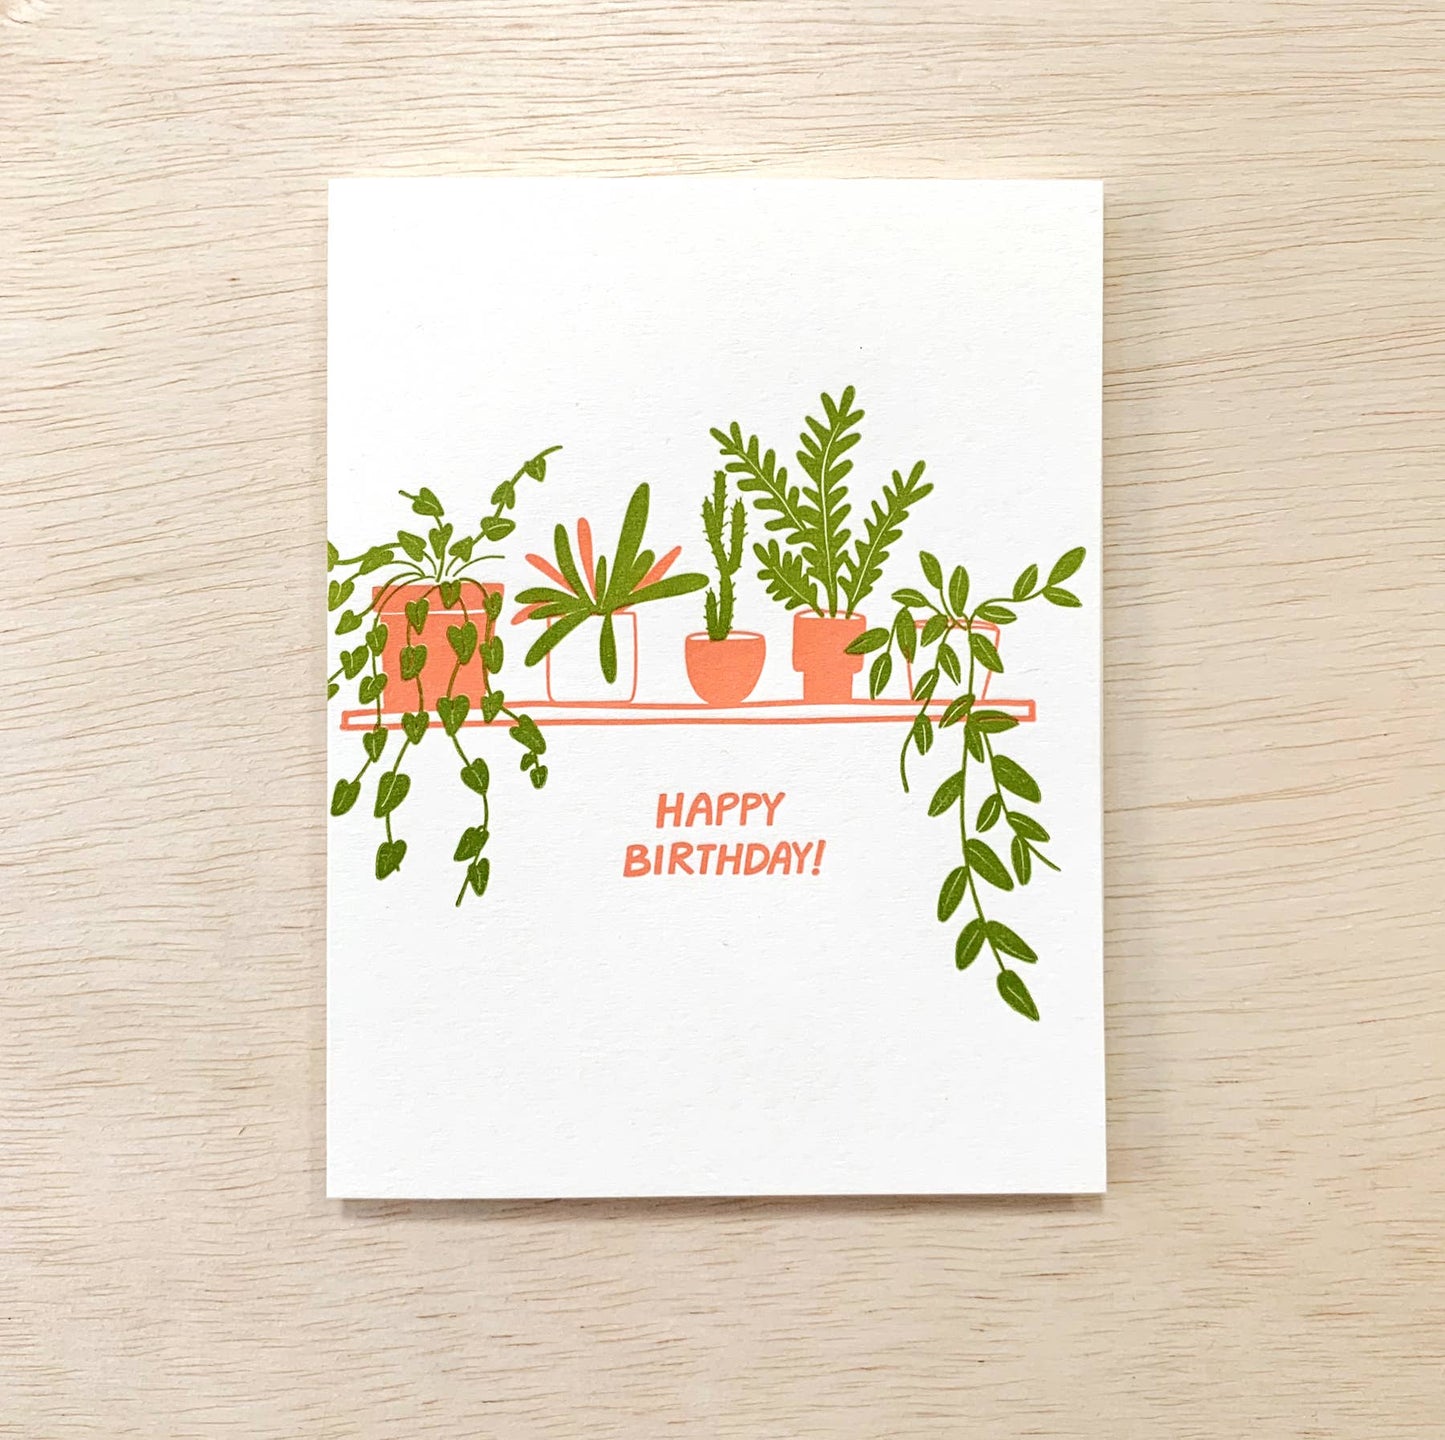 Plant Wall Birthday